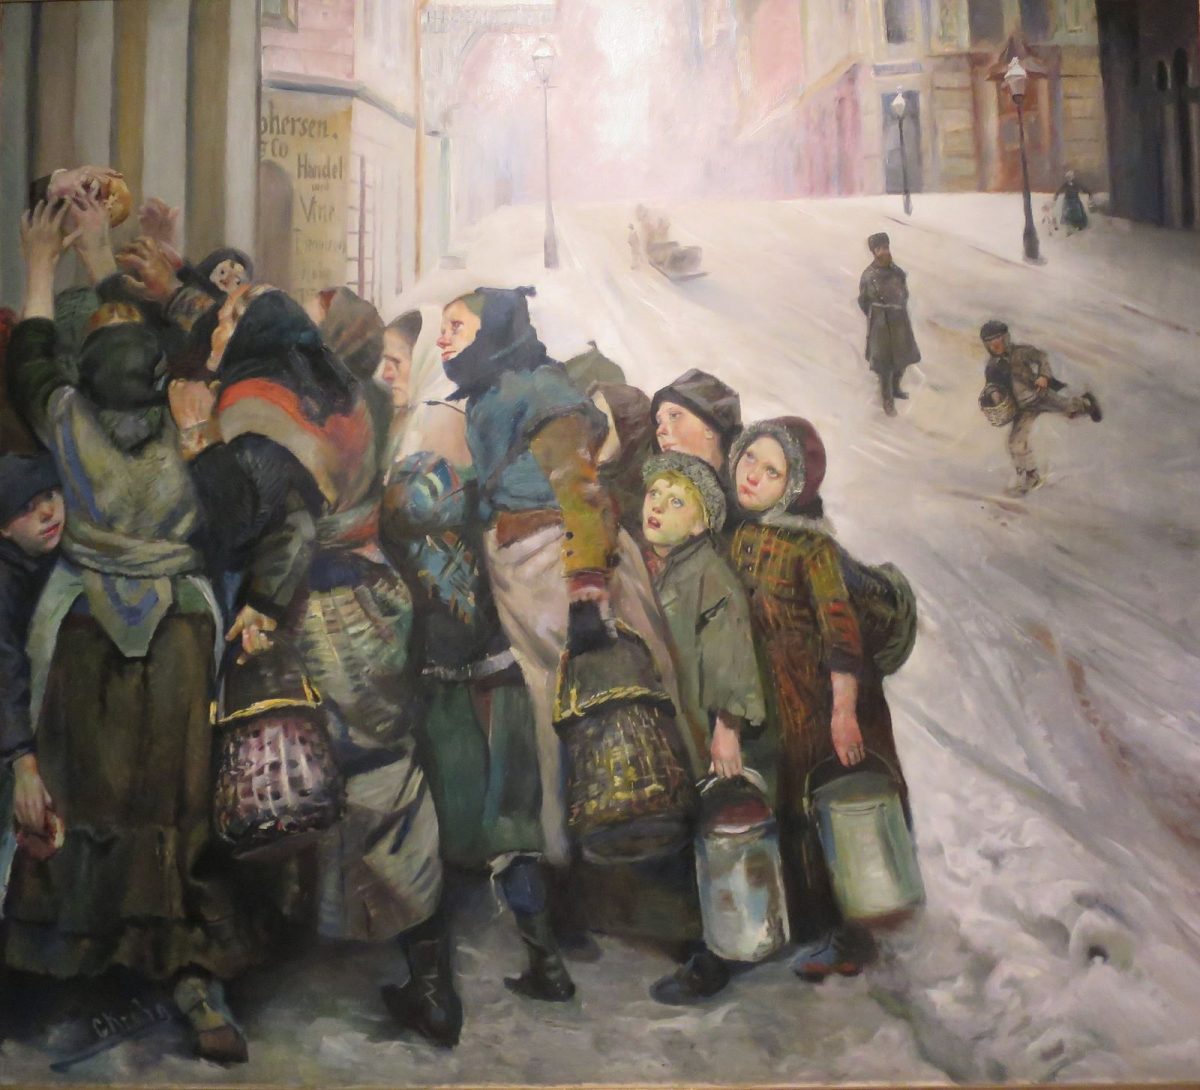 Christian Krohg, Norwegian, art, painting, oils, artist, Realism, 1800s,